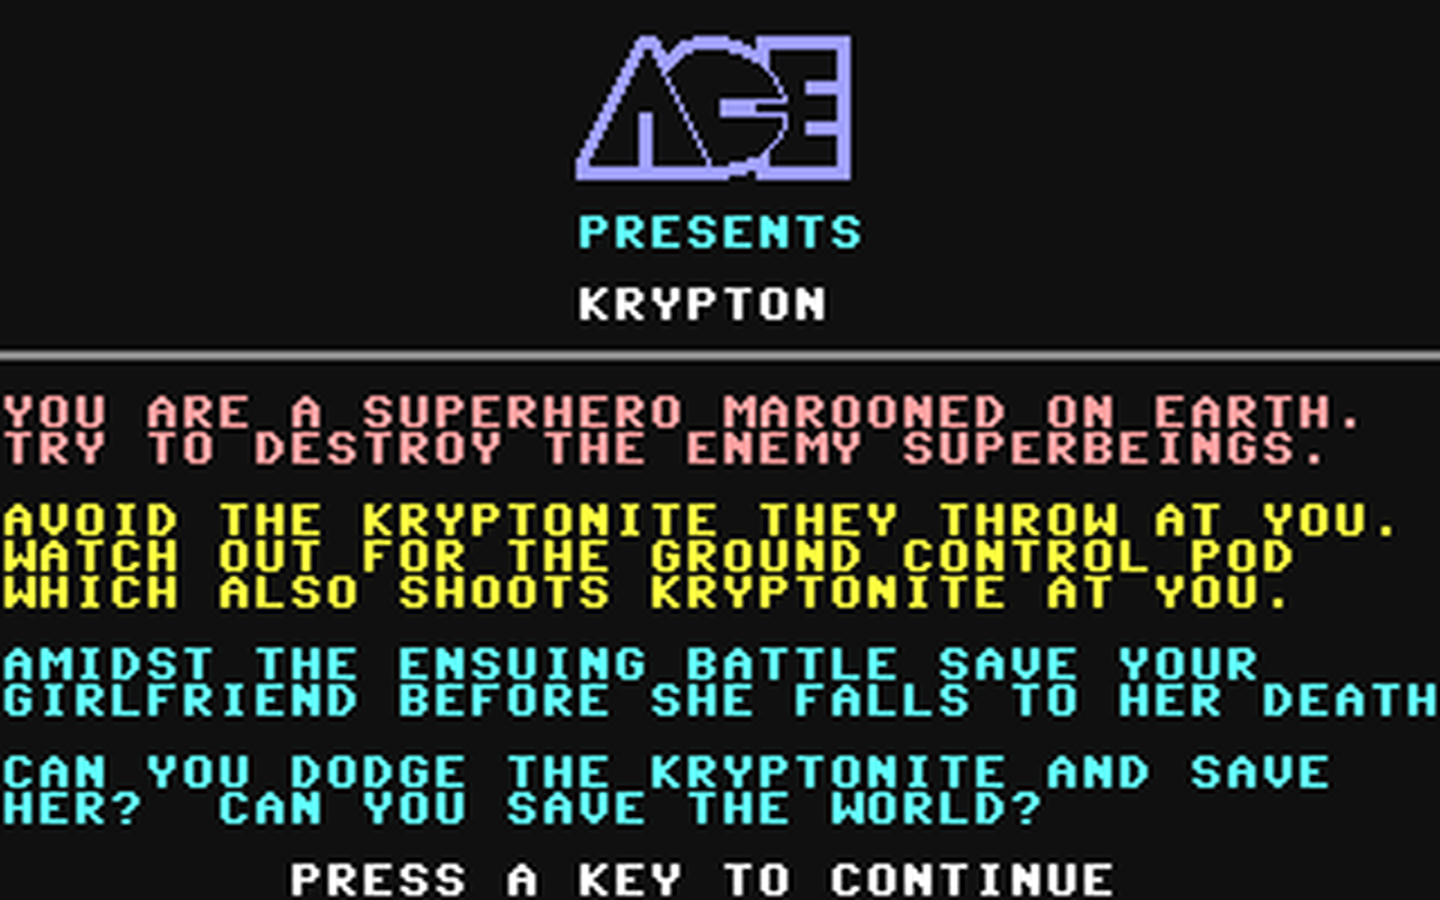 C64 GameBase Krypton ACE_(Advanced_Computer_Entertainment) 1984